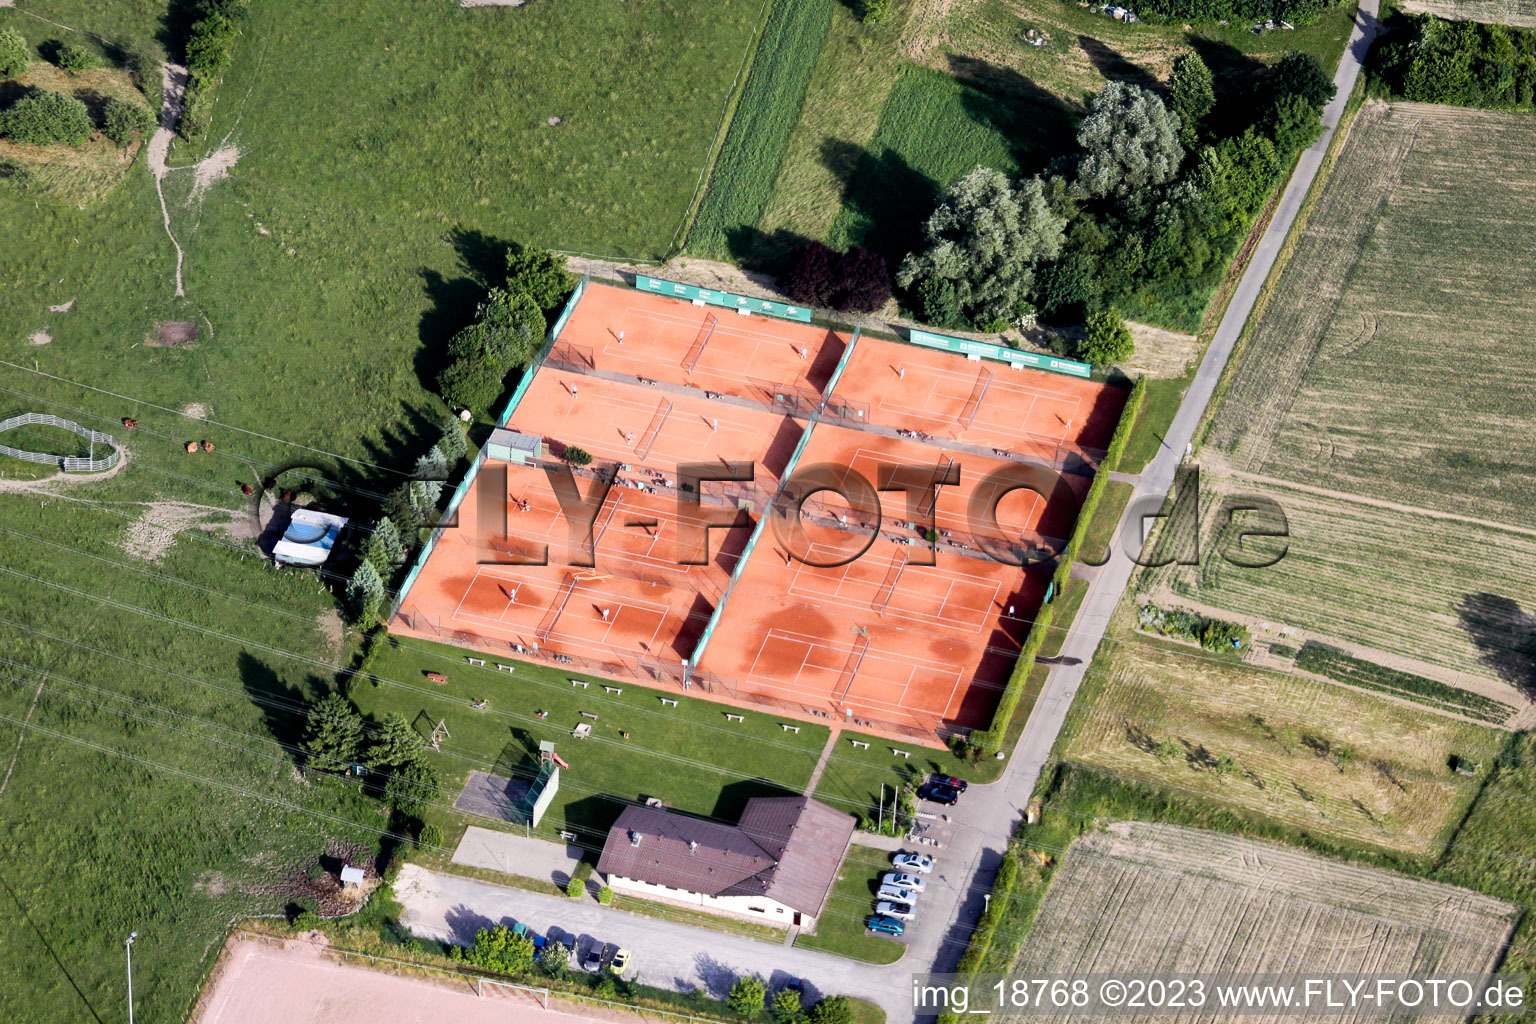 Tennis club in Elchesheim in the state Baden-Wuerttemberg, Germany